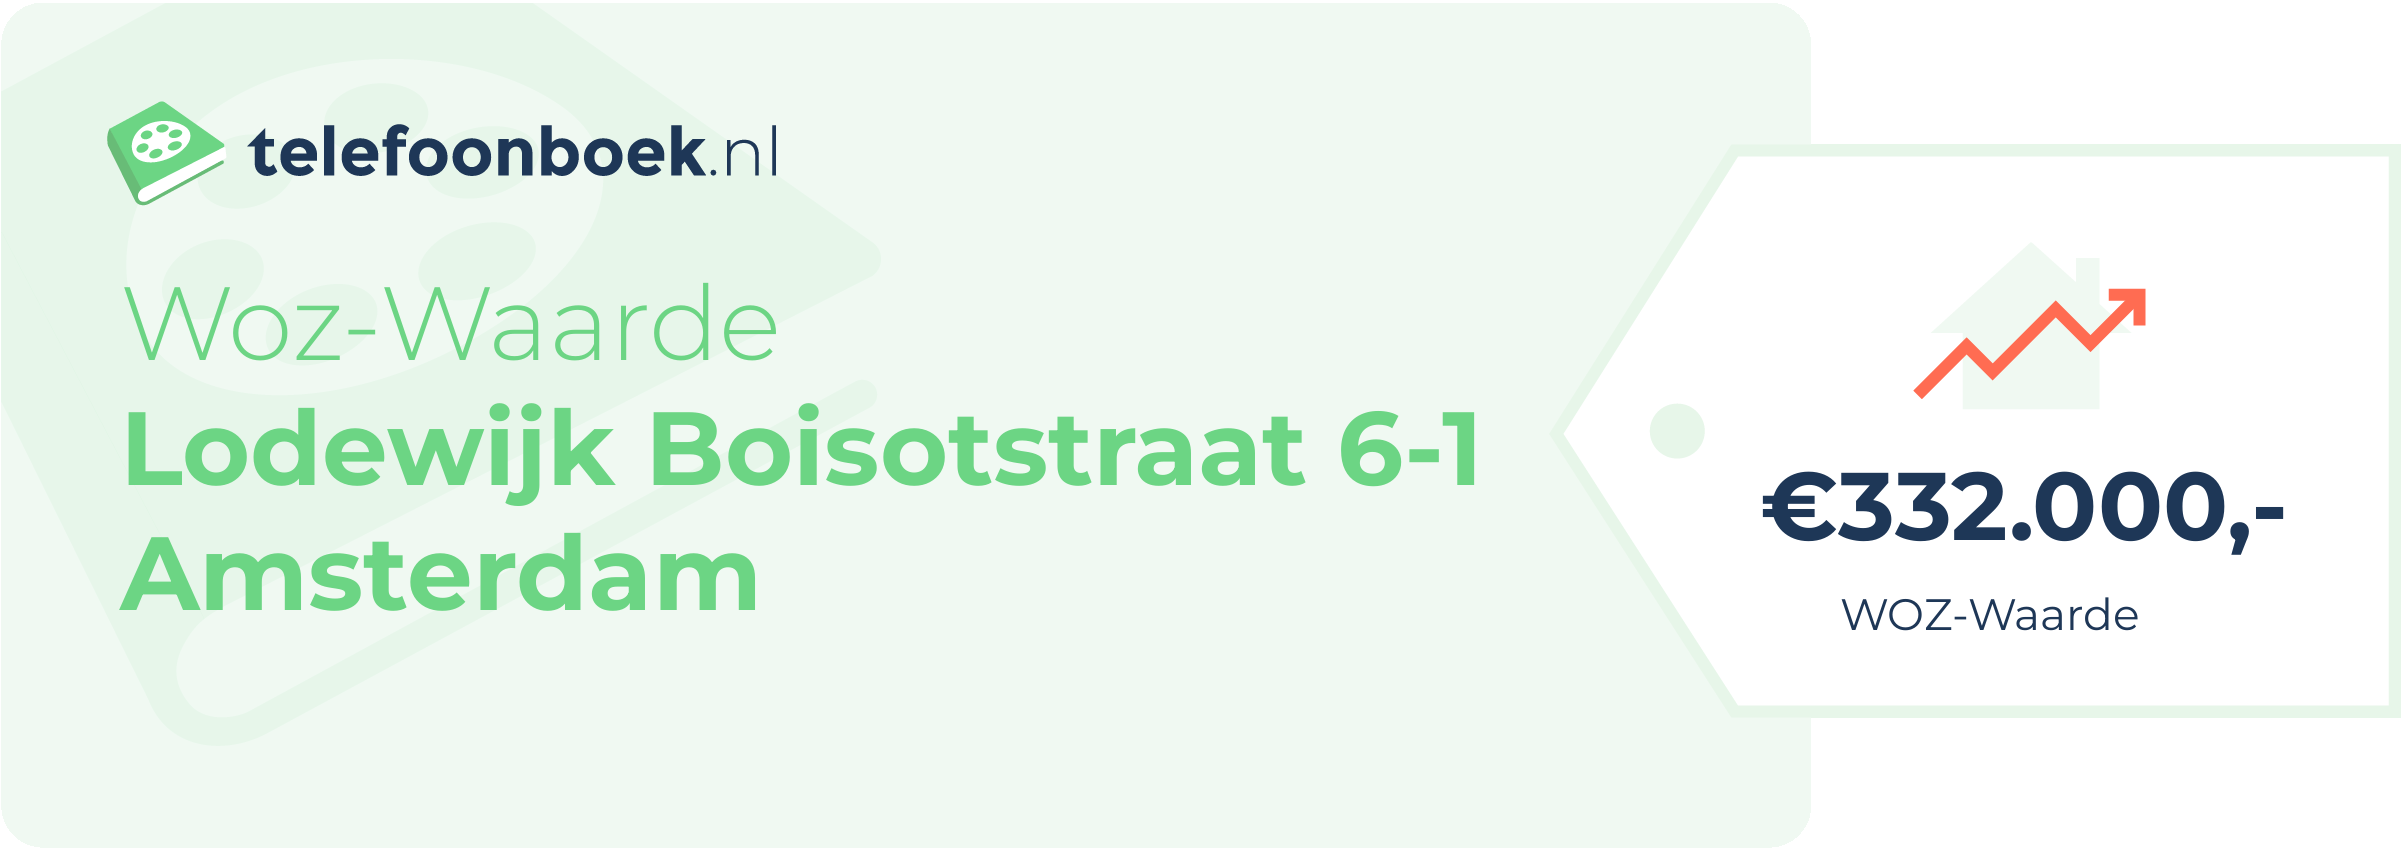 WOZ-waarde Lodewijk Boisotstraat 6-1 Amsterdam